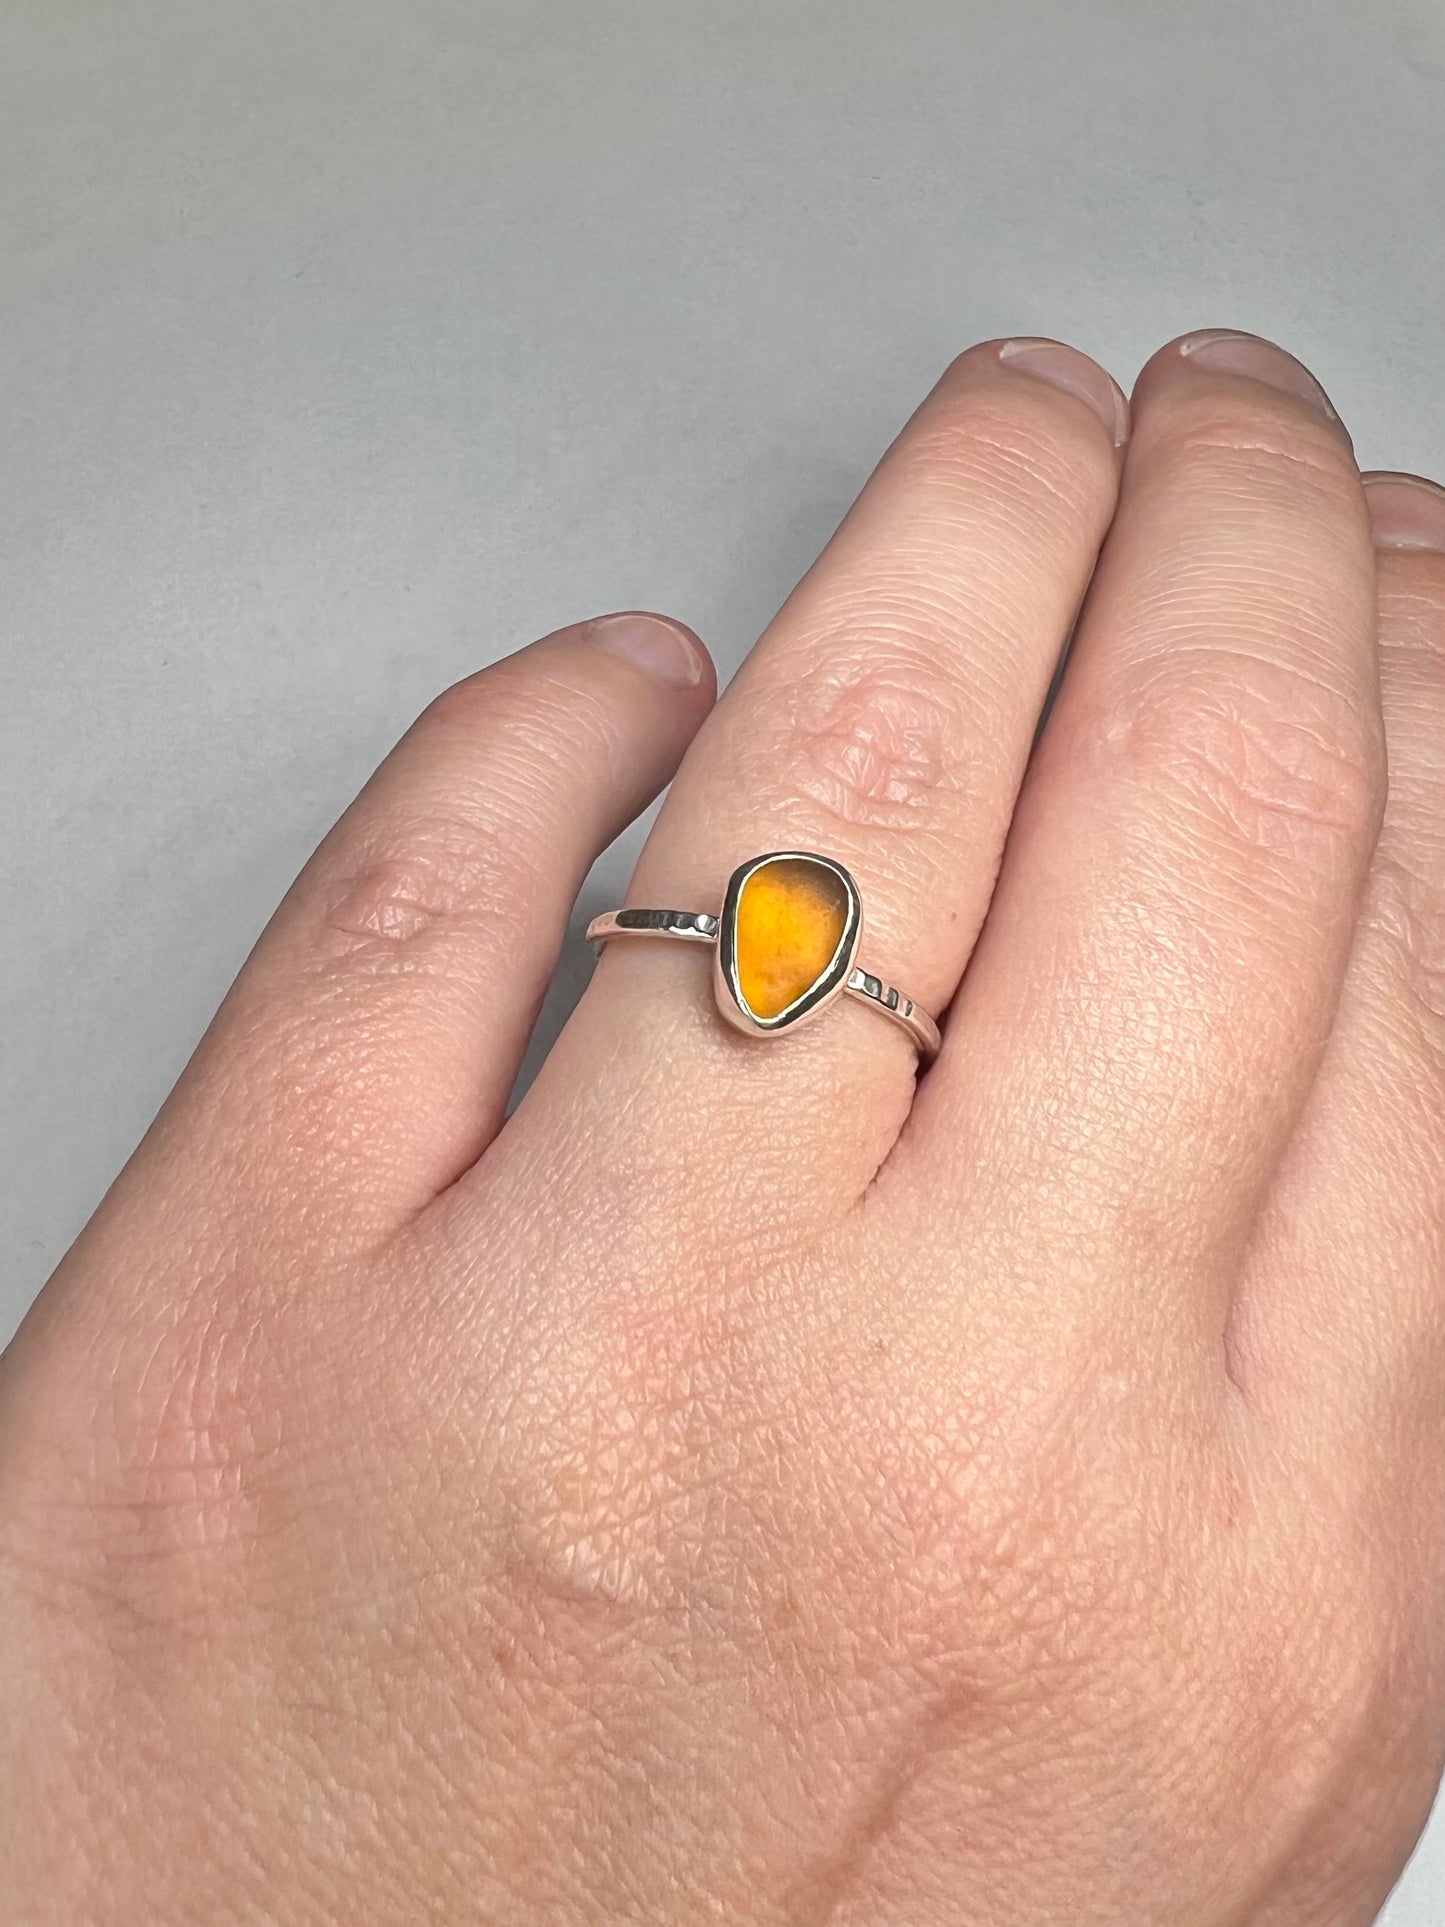 Cornish amber seaglass ring size P